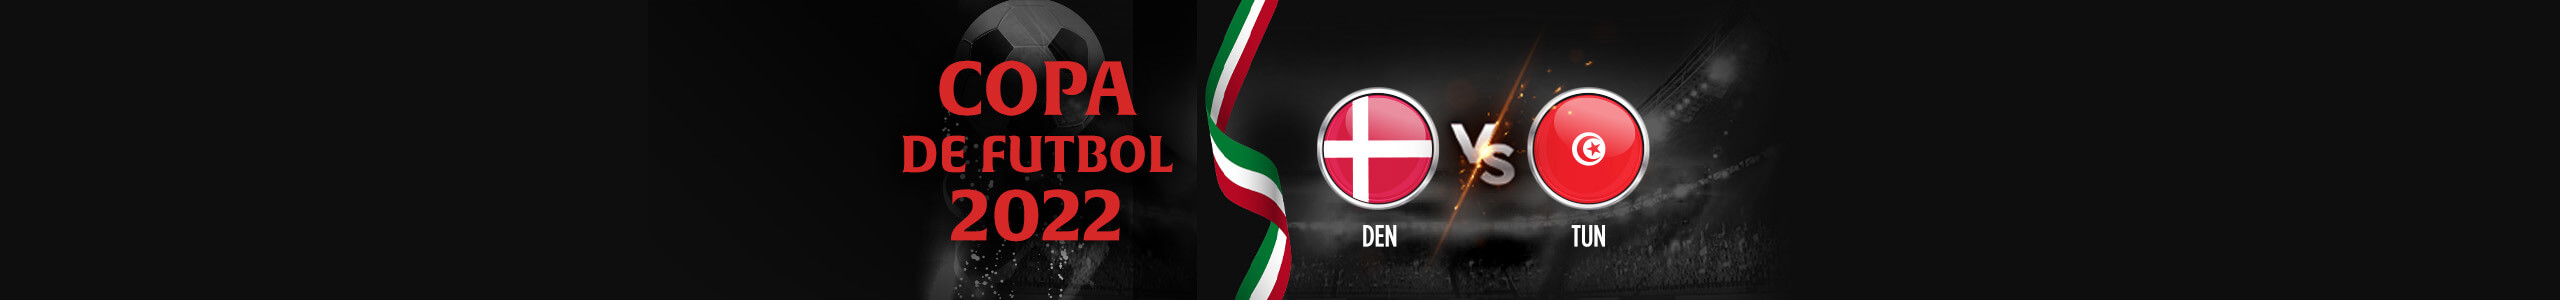 Copa Mundial 2022 - Dinamarca vs Tunez